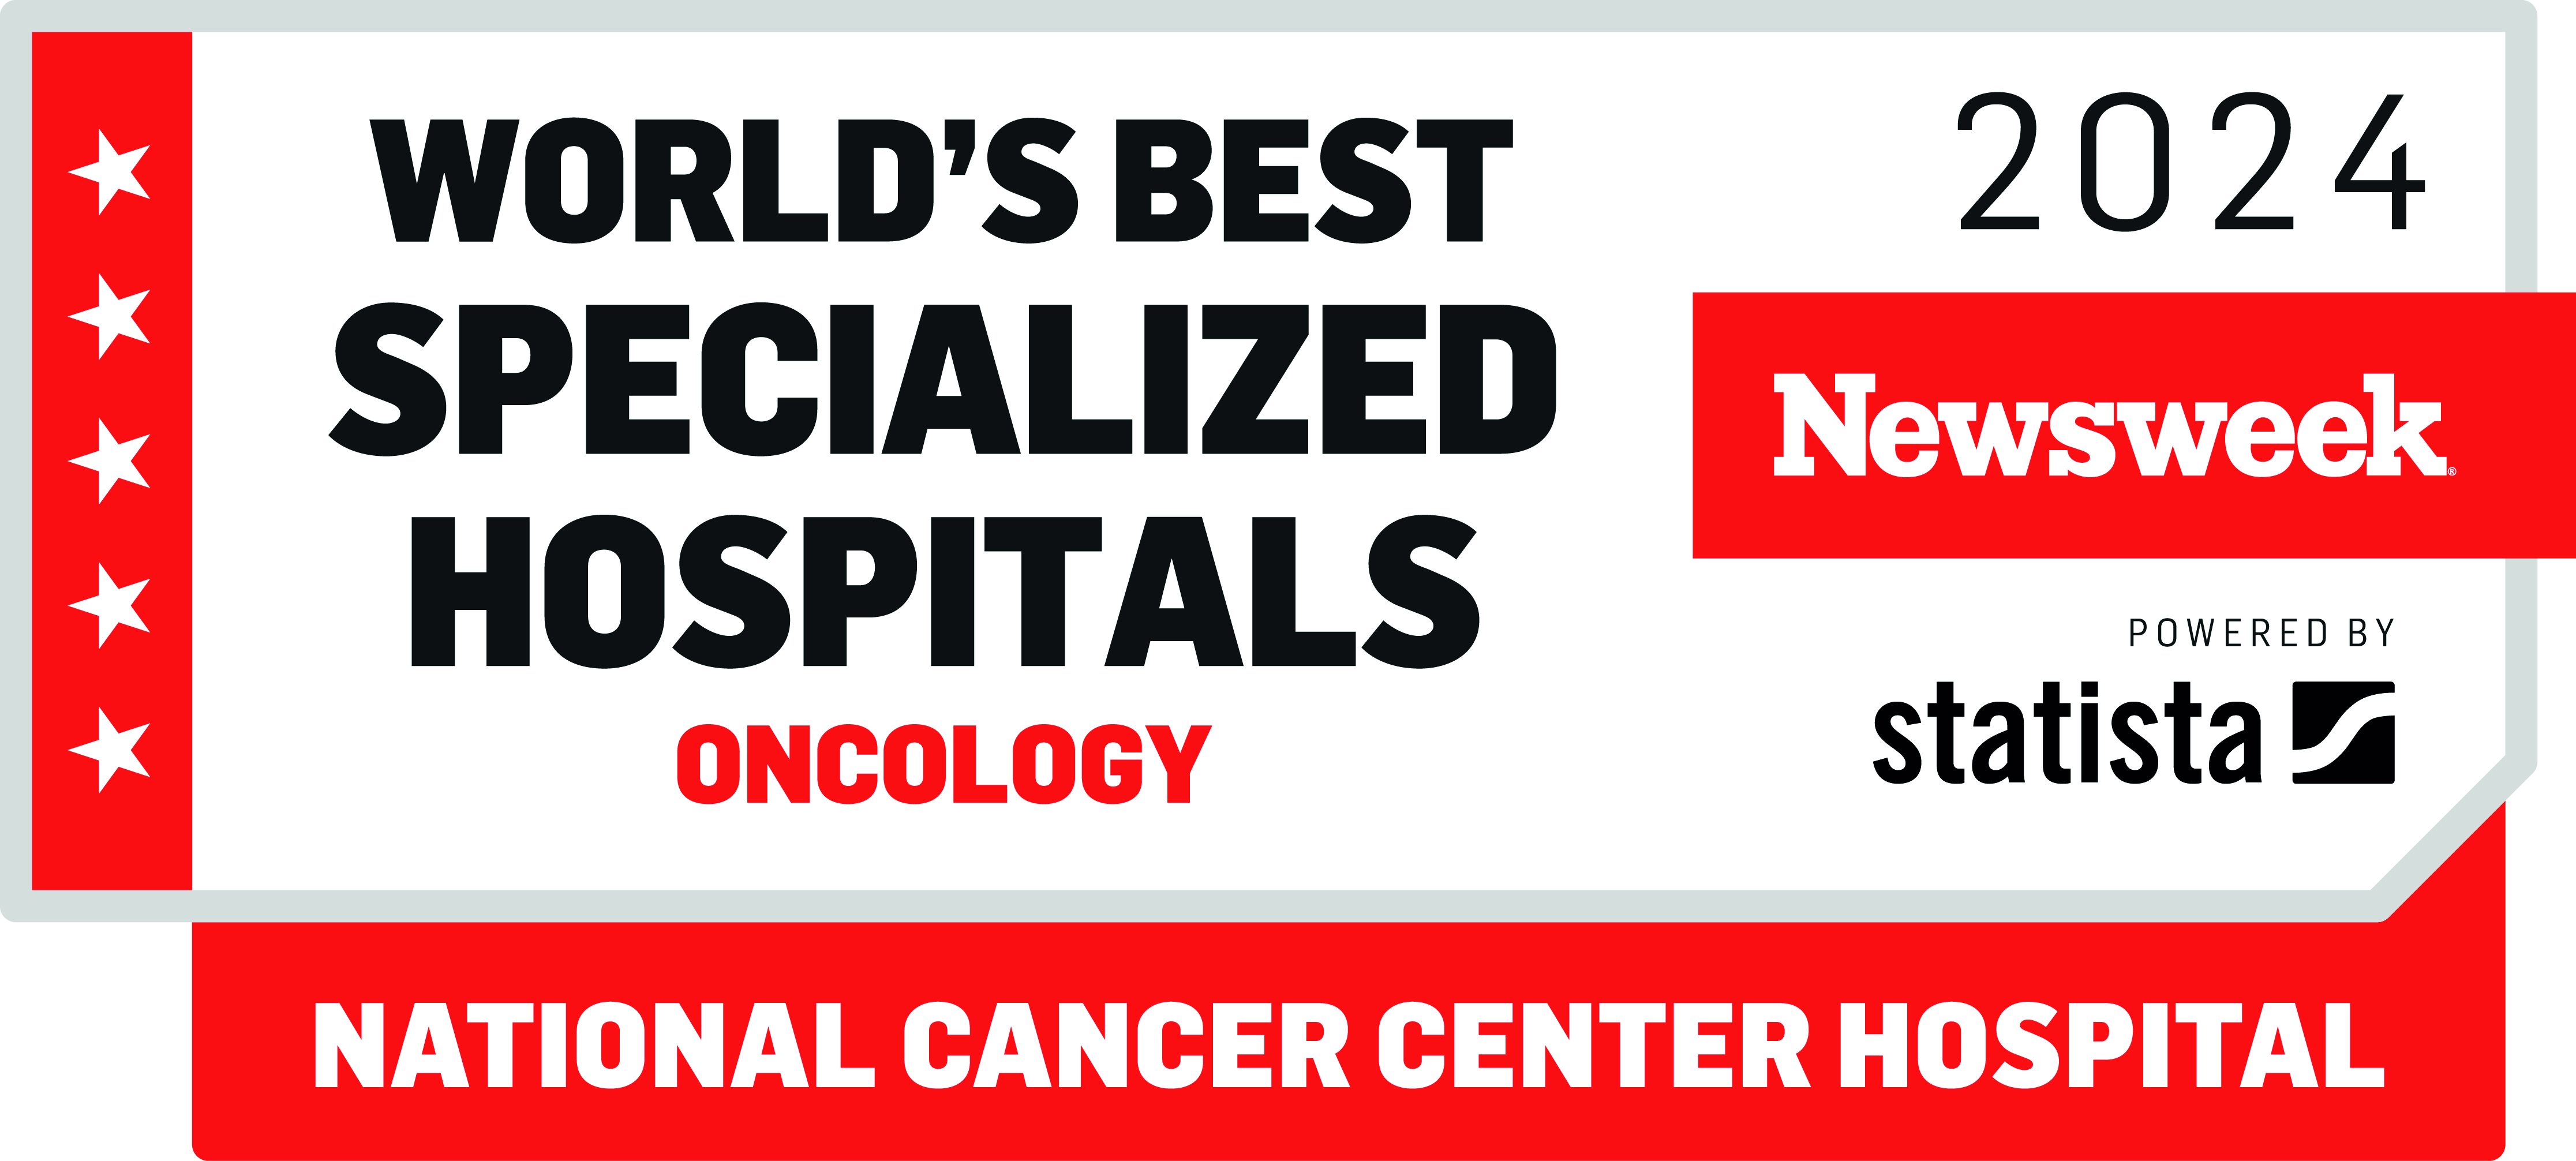 Newsweek_WBH2021_Siegel_National_Cancer_Center_Hospital_Oncology_hor.jpg